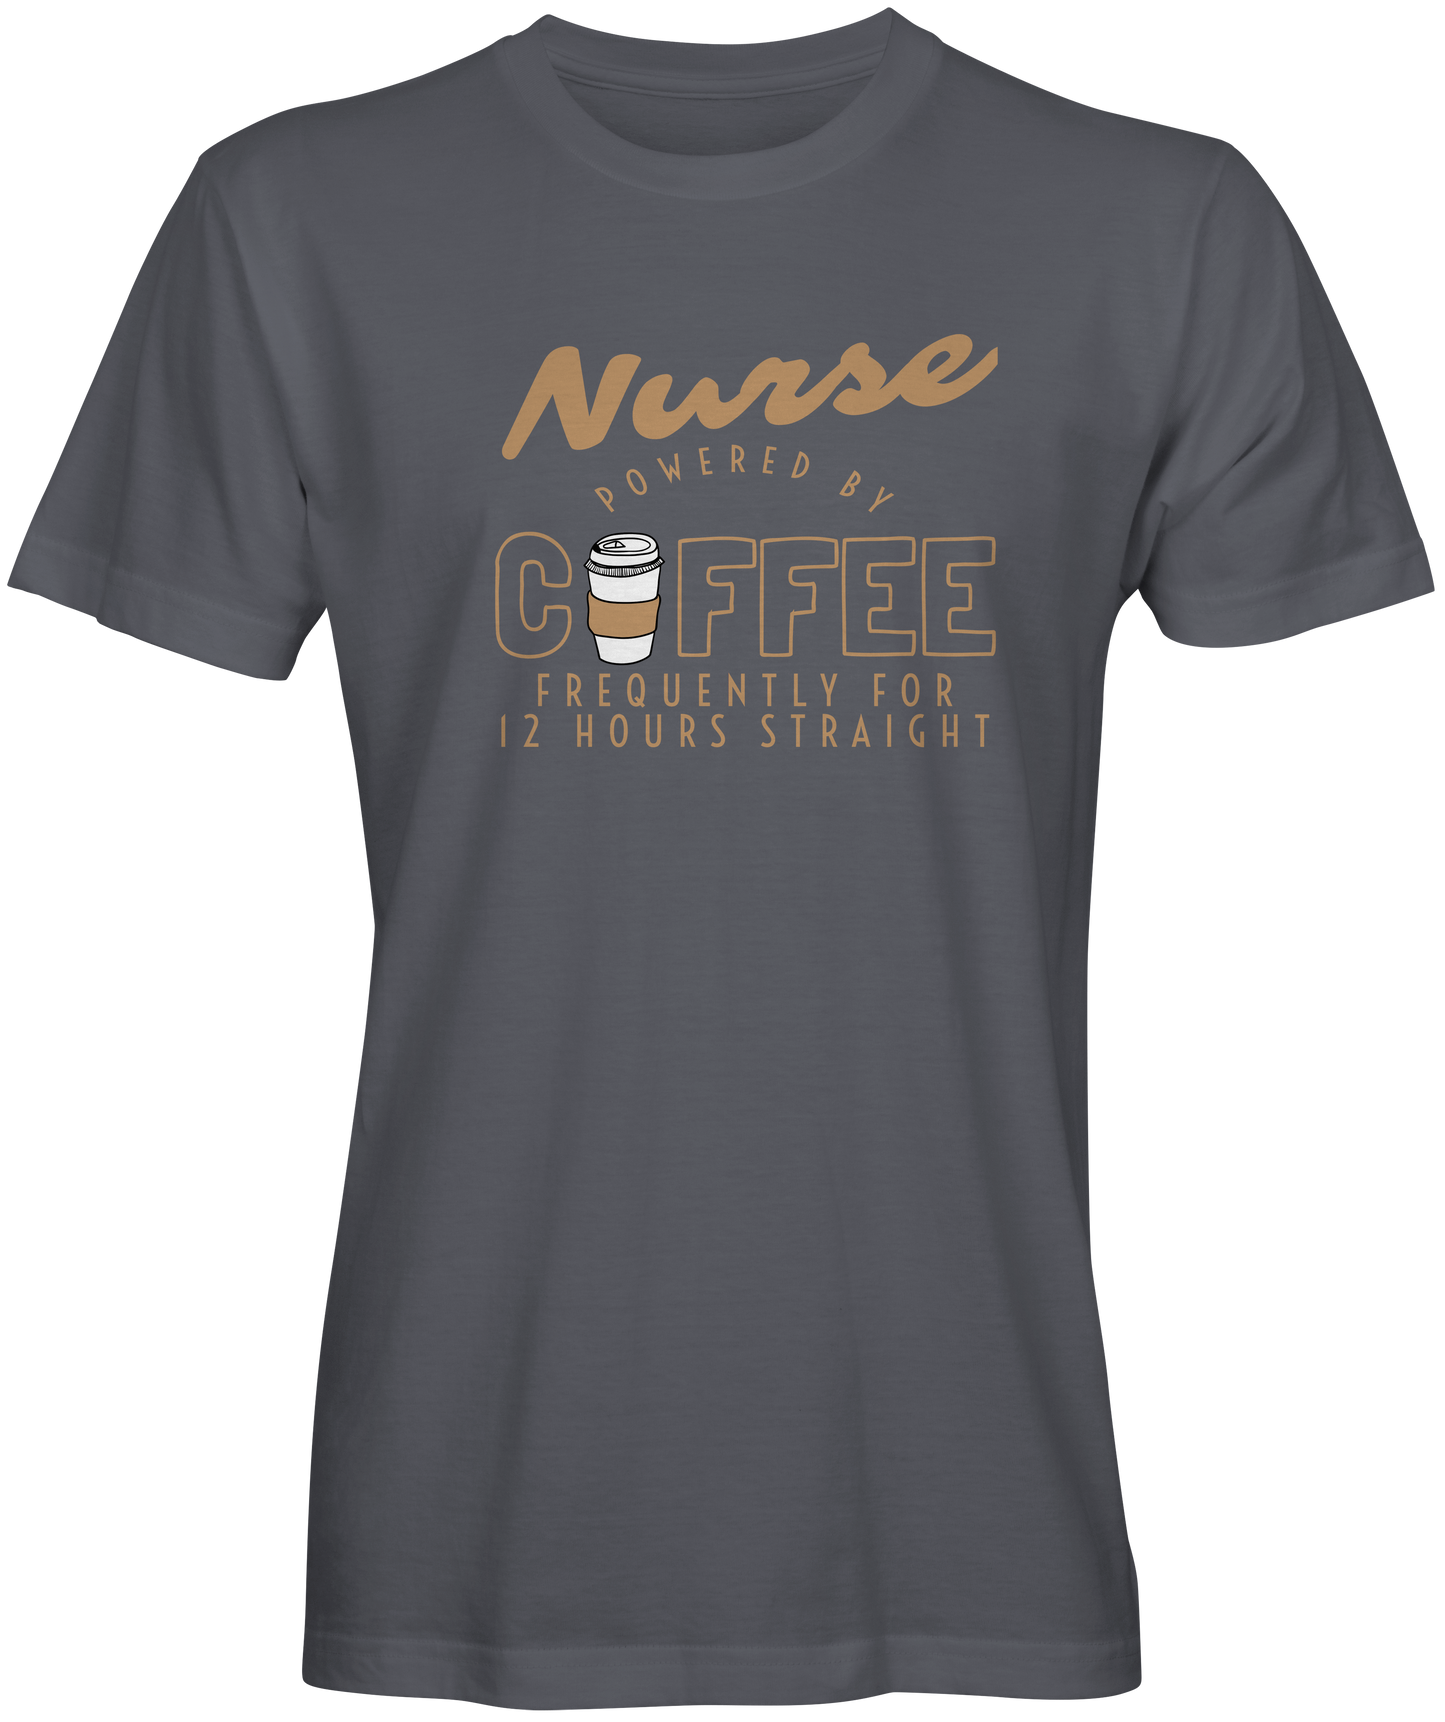 Nurse Powered By Coffee Graphic Tee